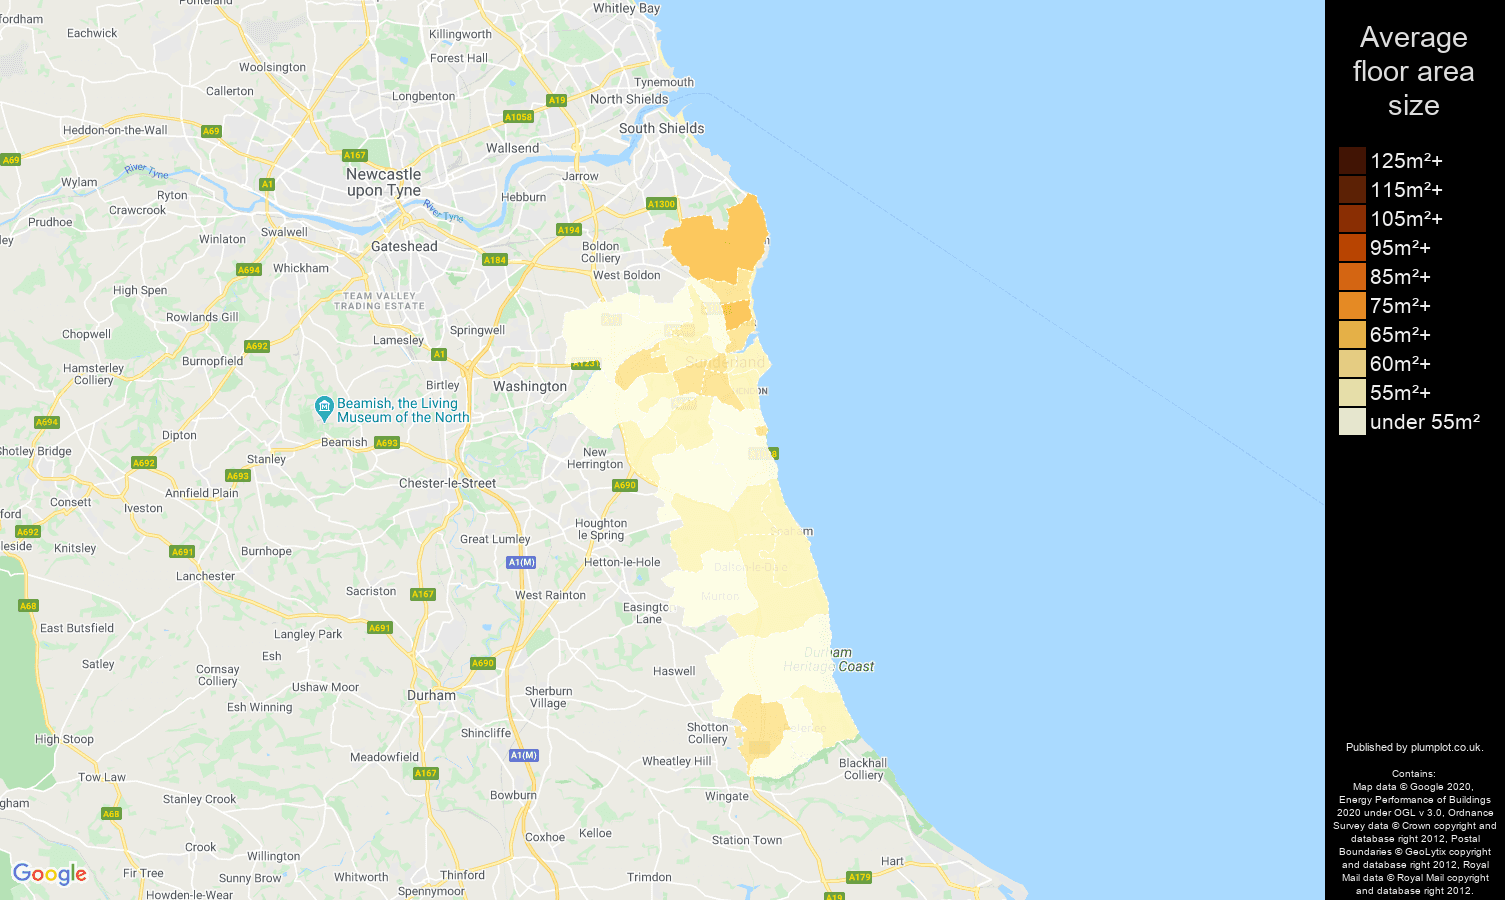 Sunderland map of average floor area size of flats